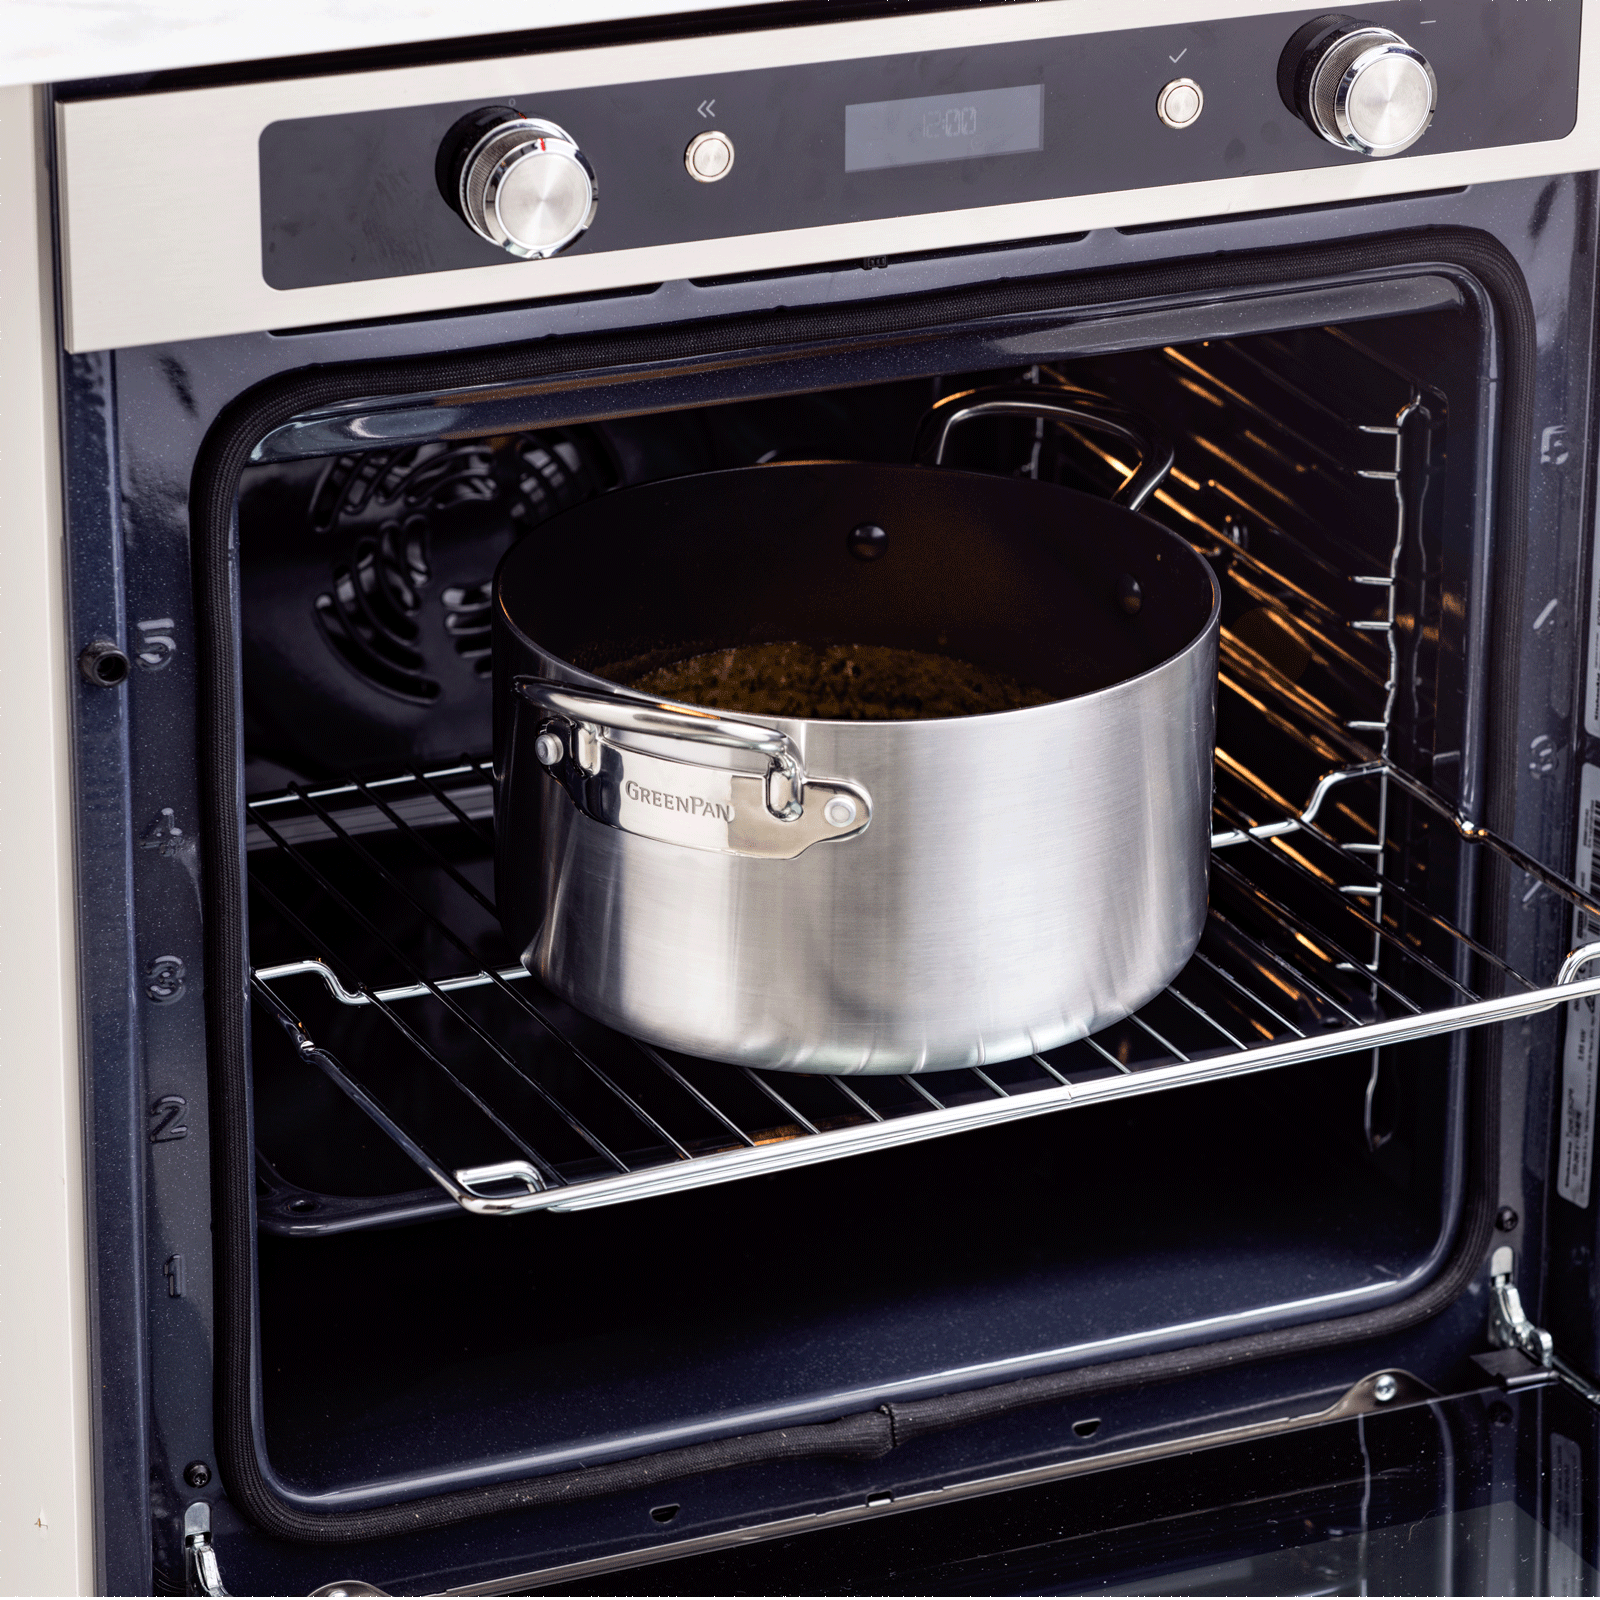 GreenPan Barcelona Evershine 14-delige set 16+20+24cm zilver kookpot in oven 